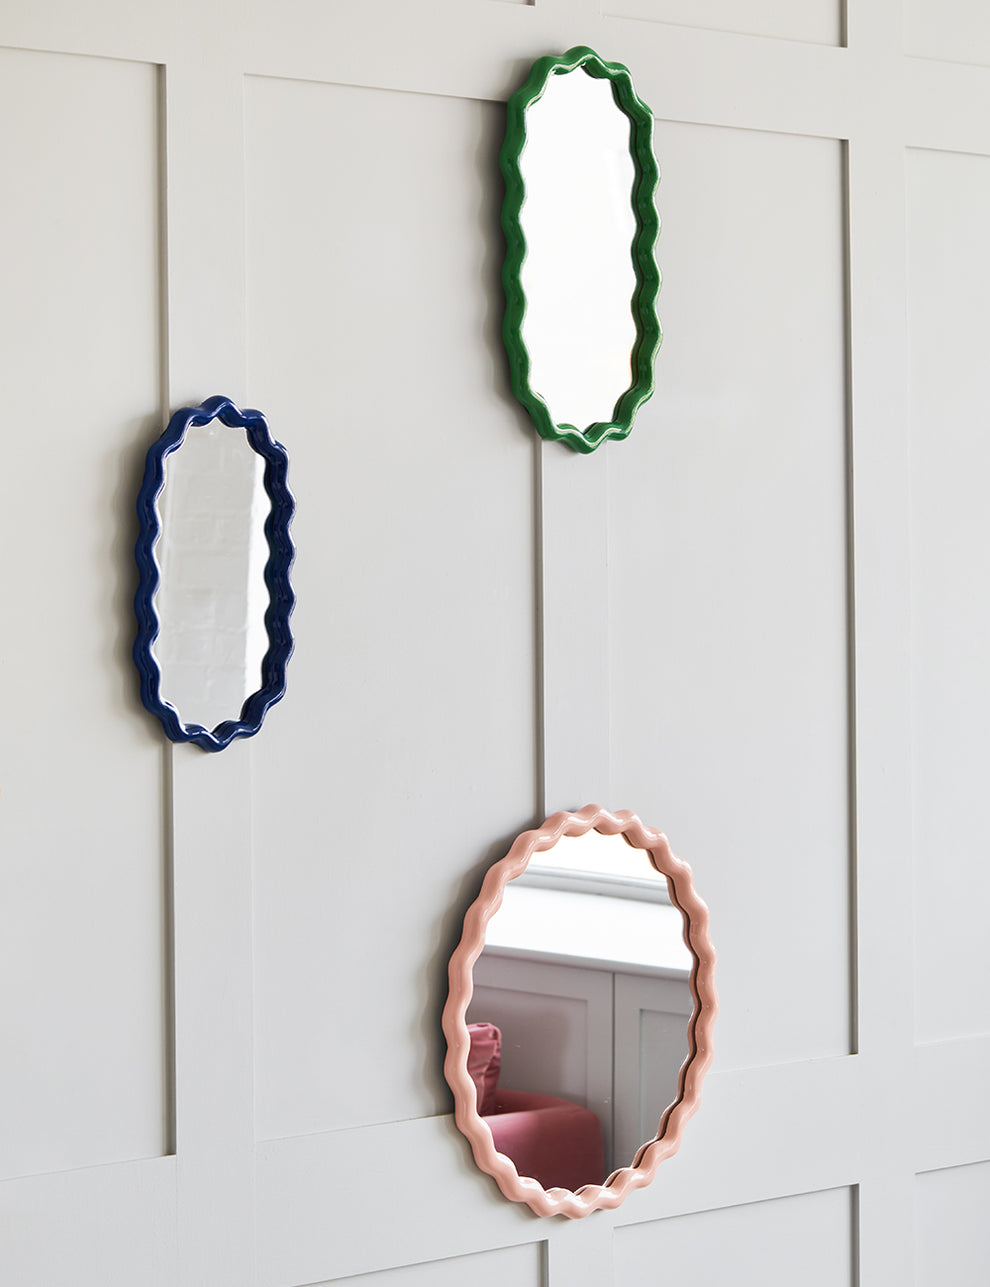 Medium Oval Green Wavy Mirror